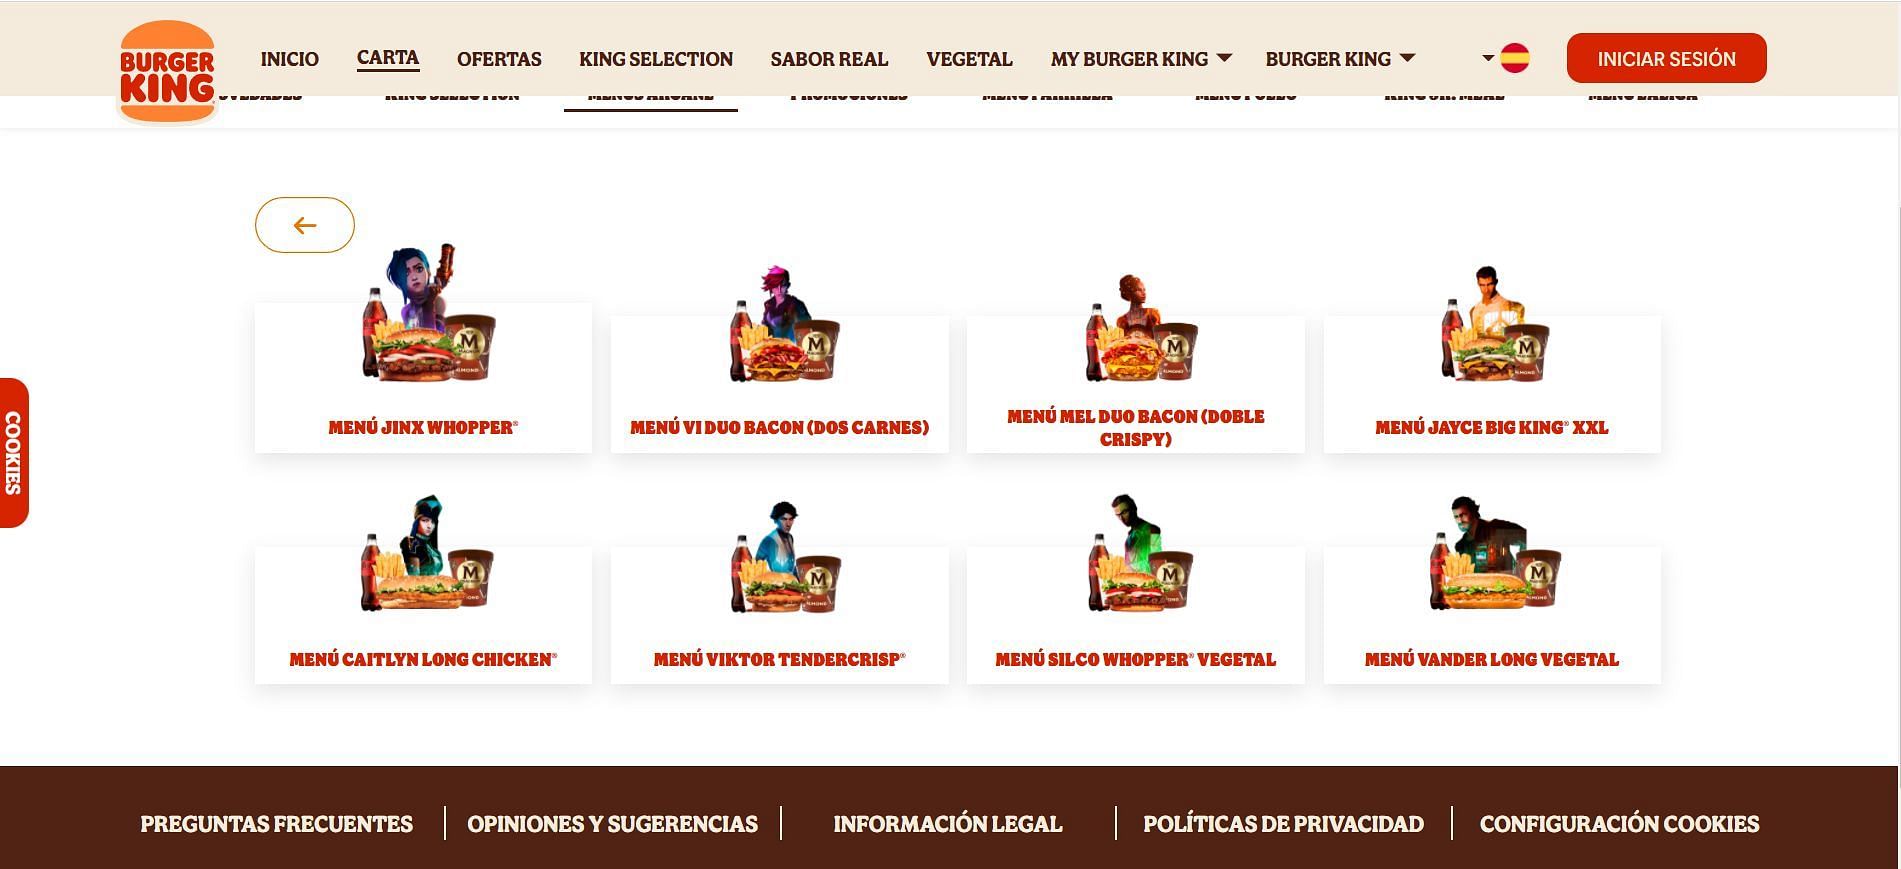 The Arcane-themed menu as shown on the Spanish Burger King website (Image via Burger King)